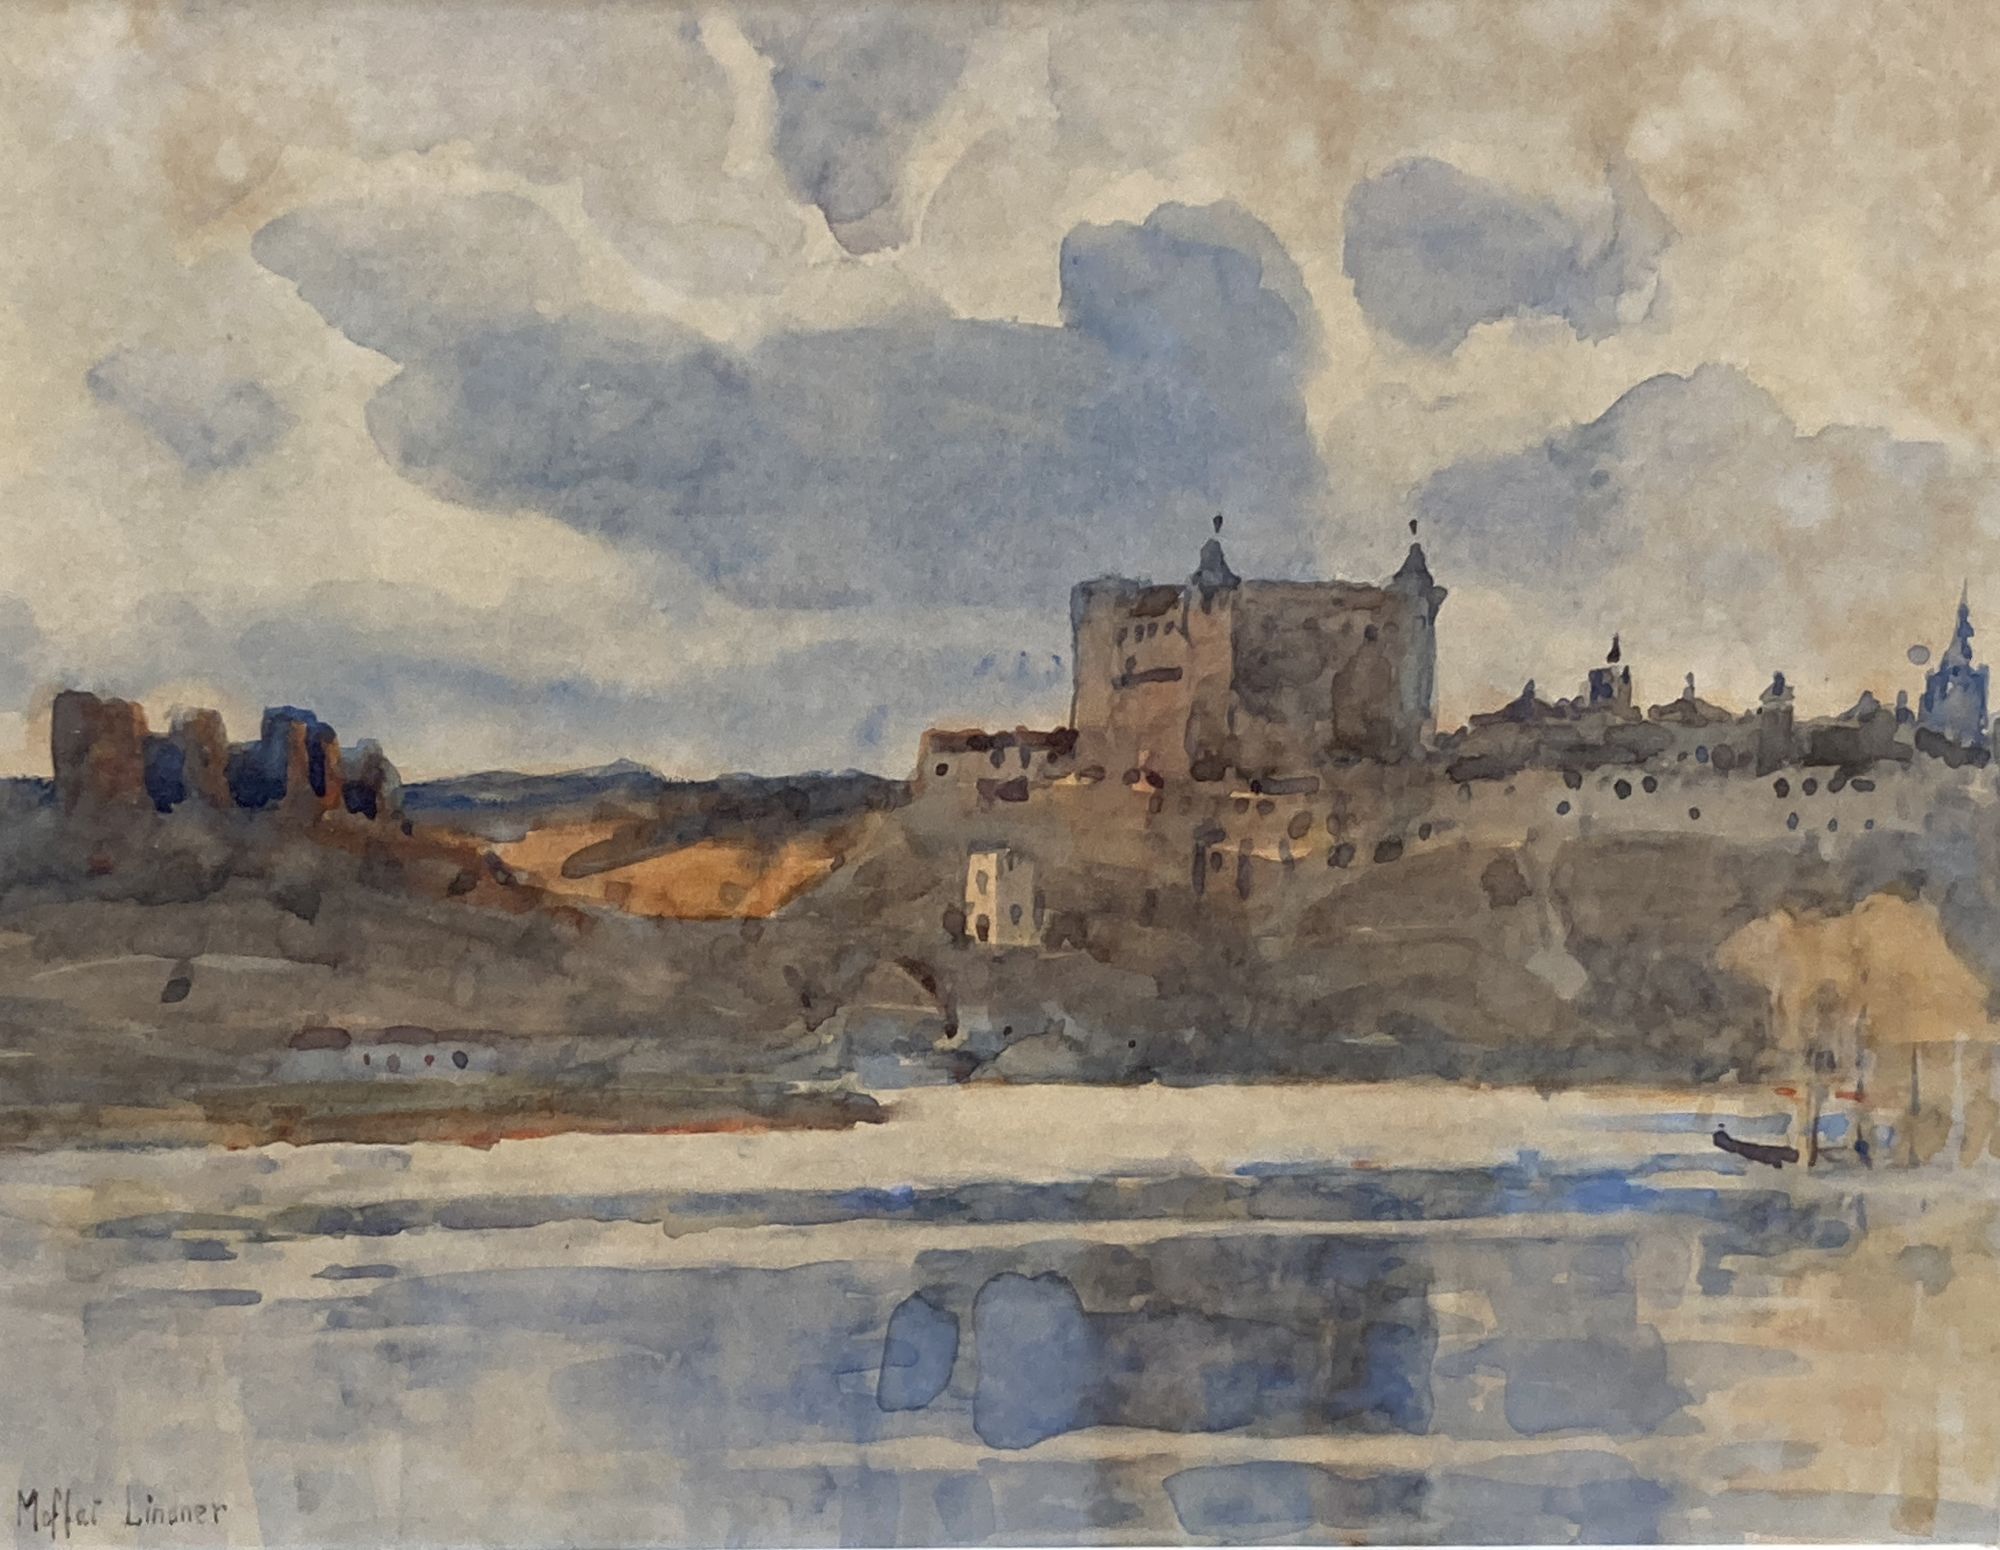 Mofat Lindner, watercolour, Waterside castle, signed, 23 x 30cm